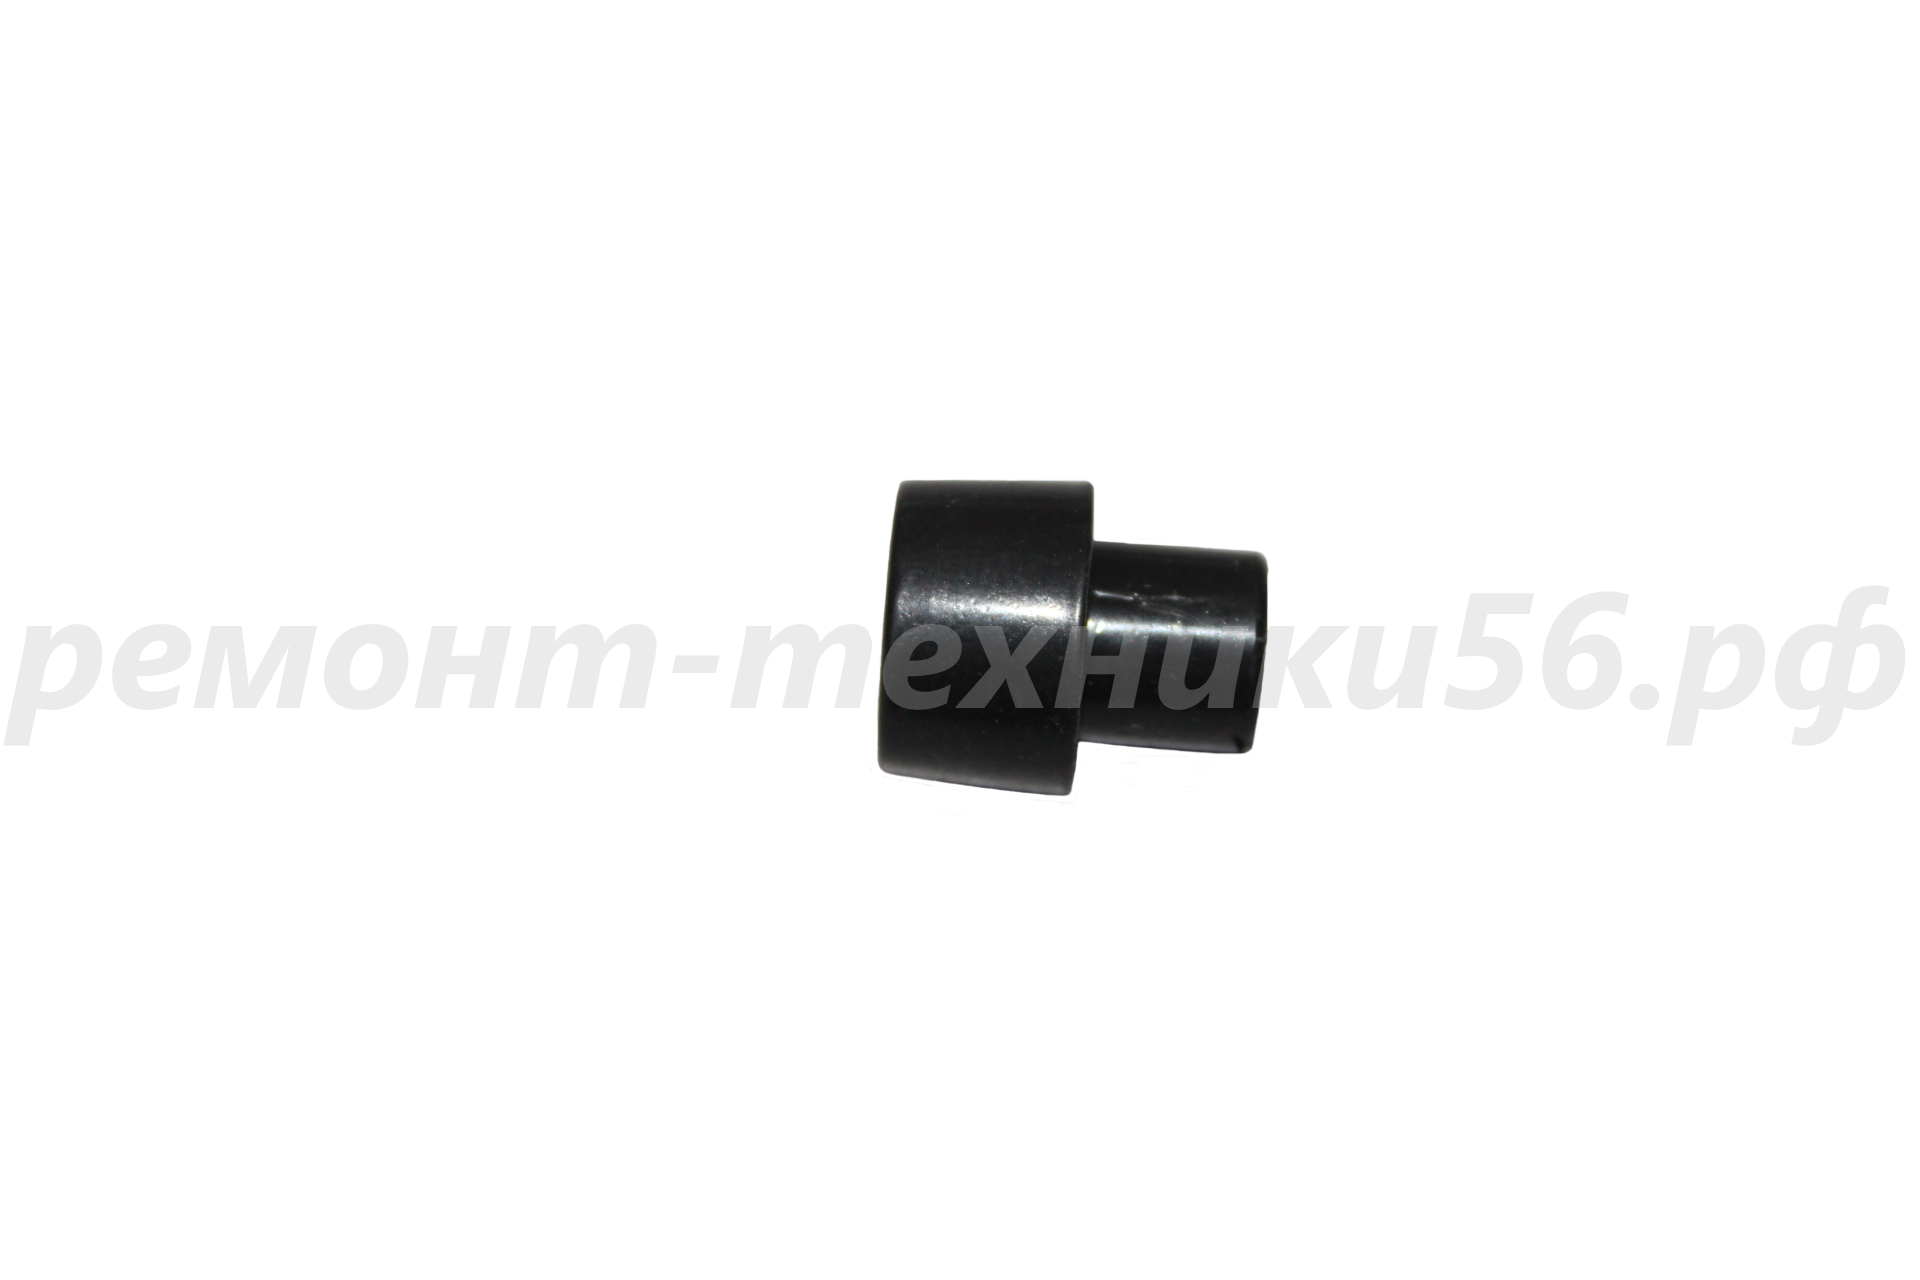 Втулка ЮМГИ 713 143 005 для мясорубки M12 Аксион - широкий ассортимент фото2